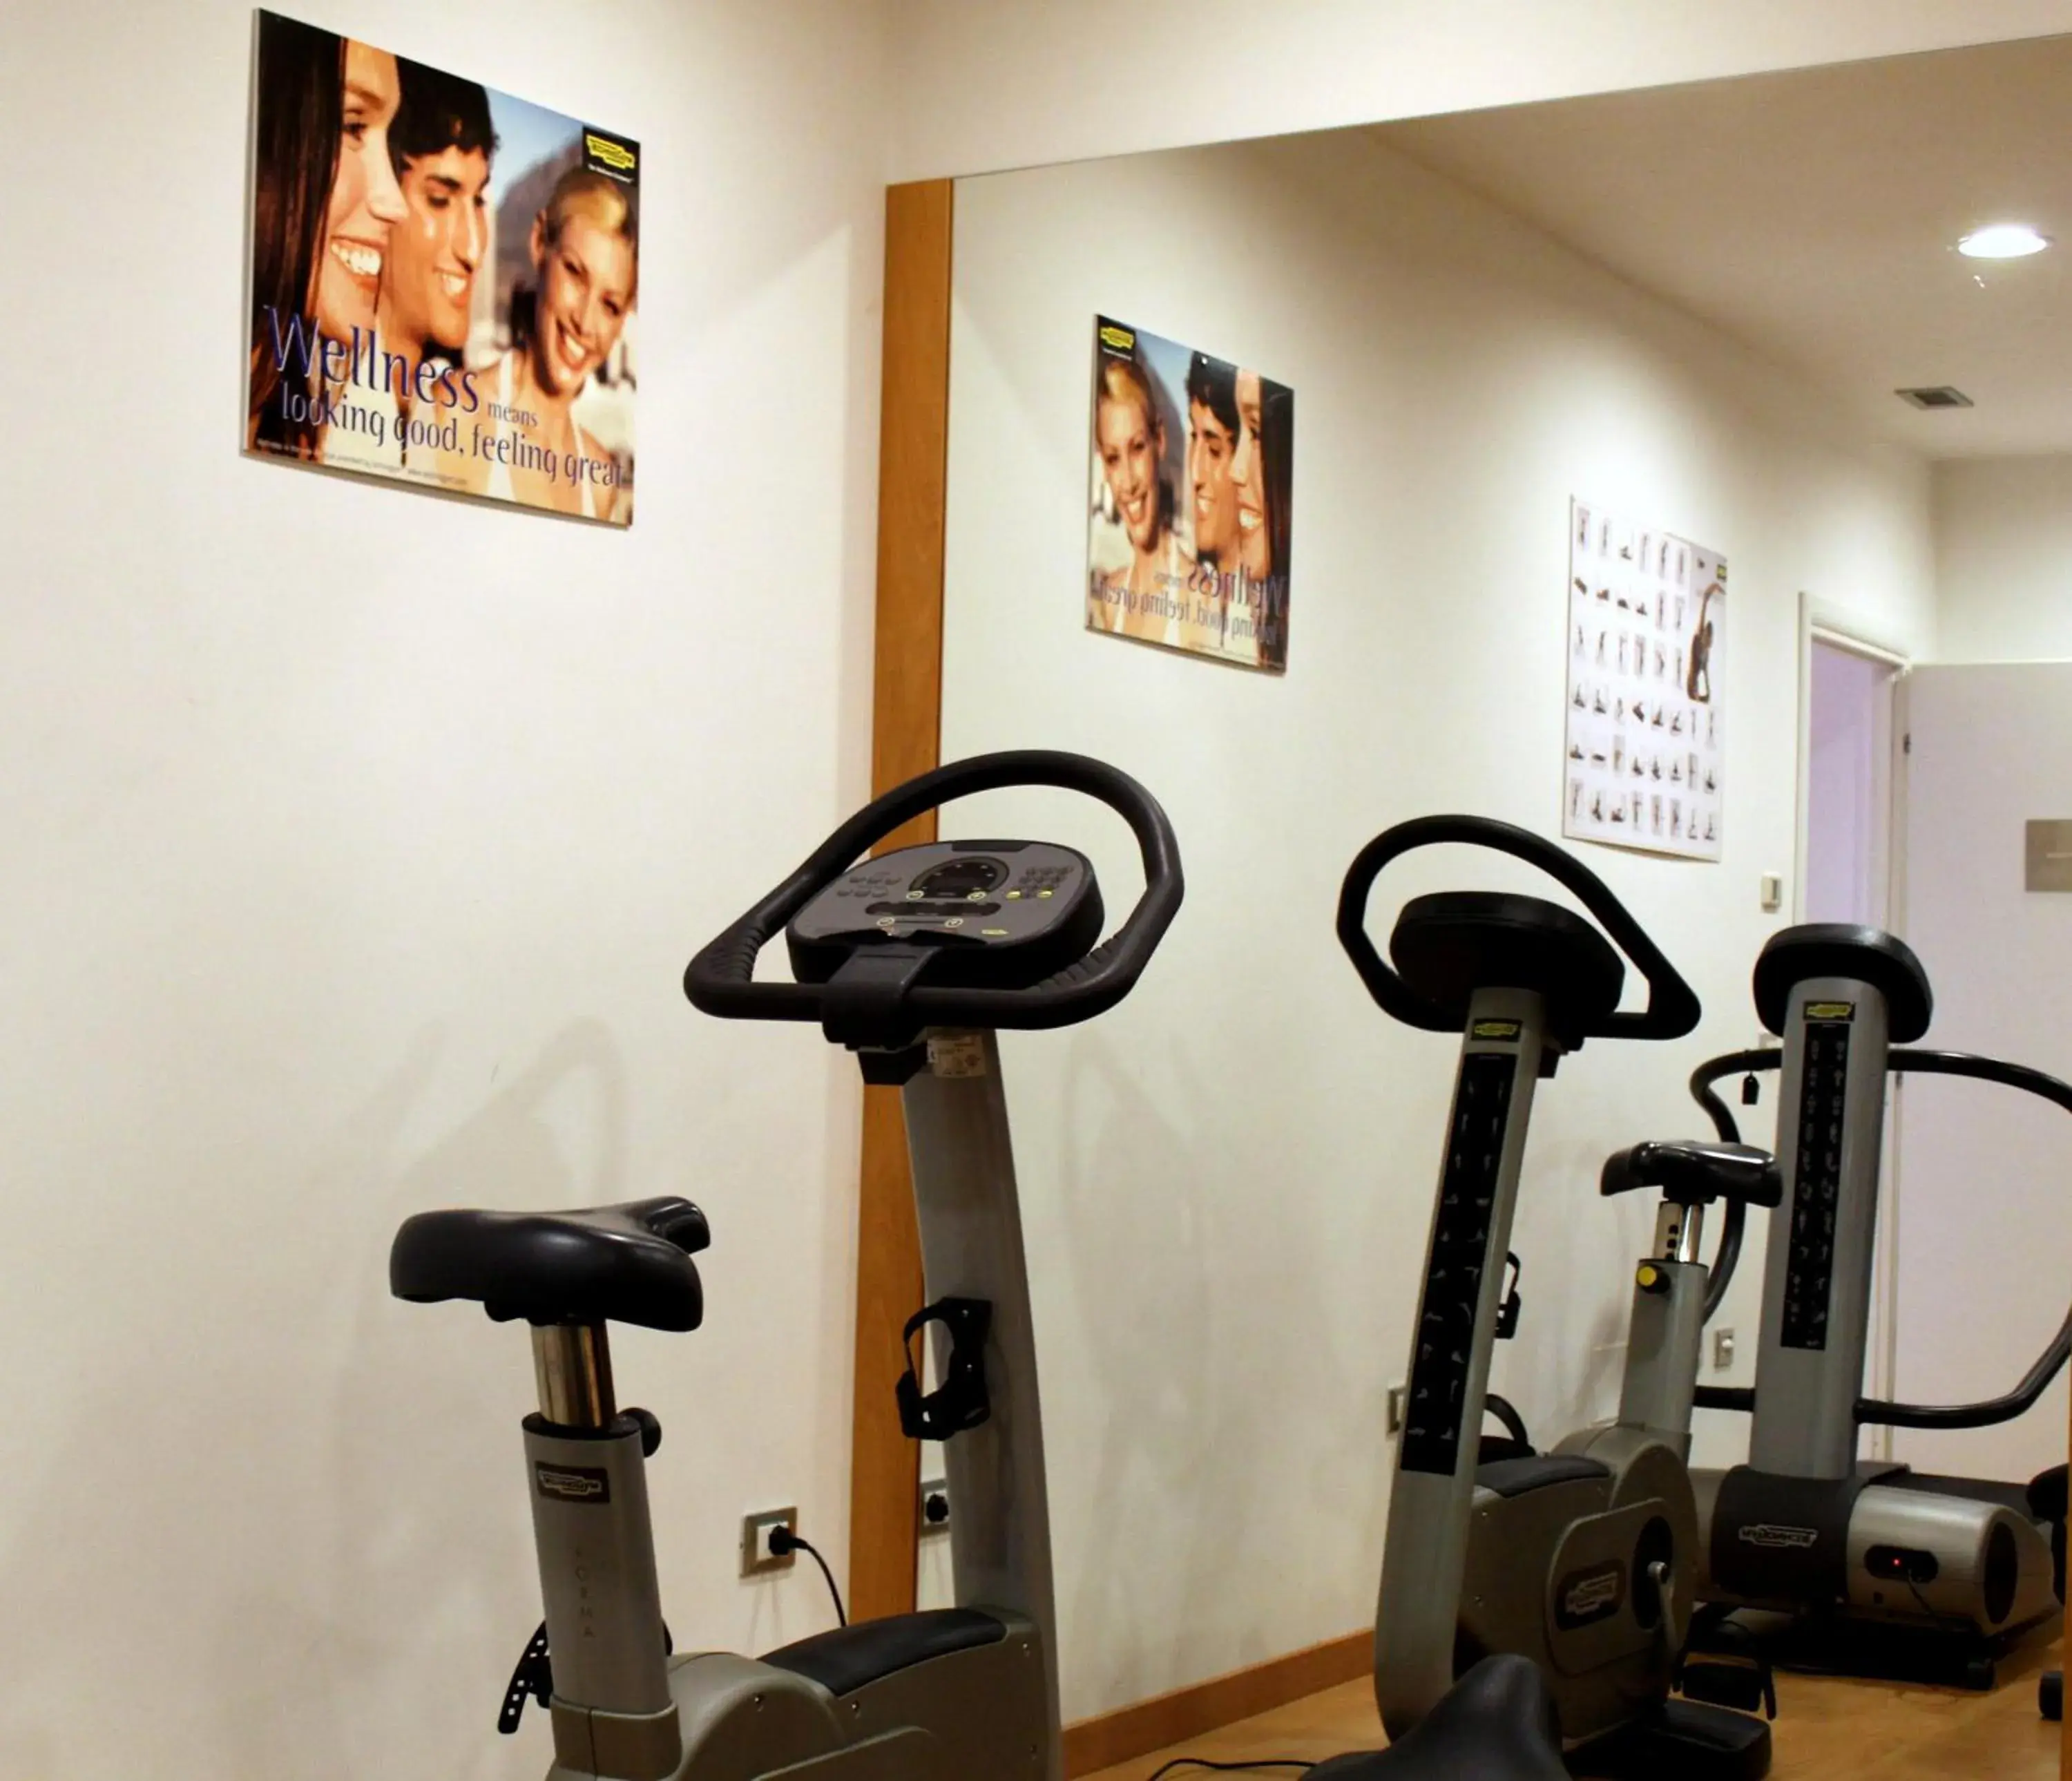 Fitness centre/facilities, Fitness Center/Facilities in OC Hotel